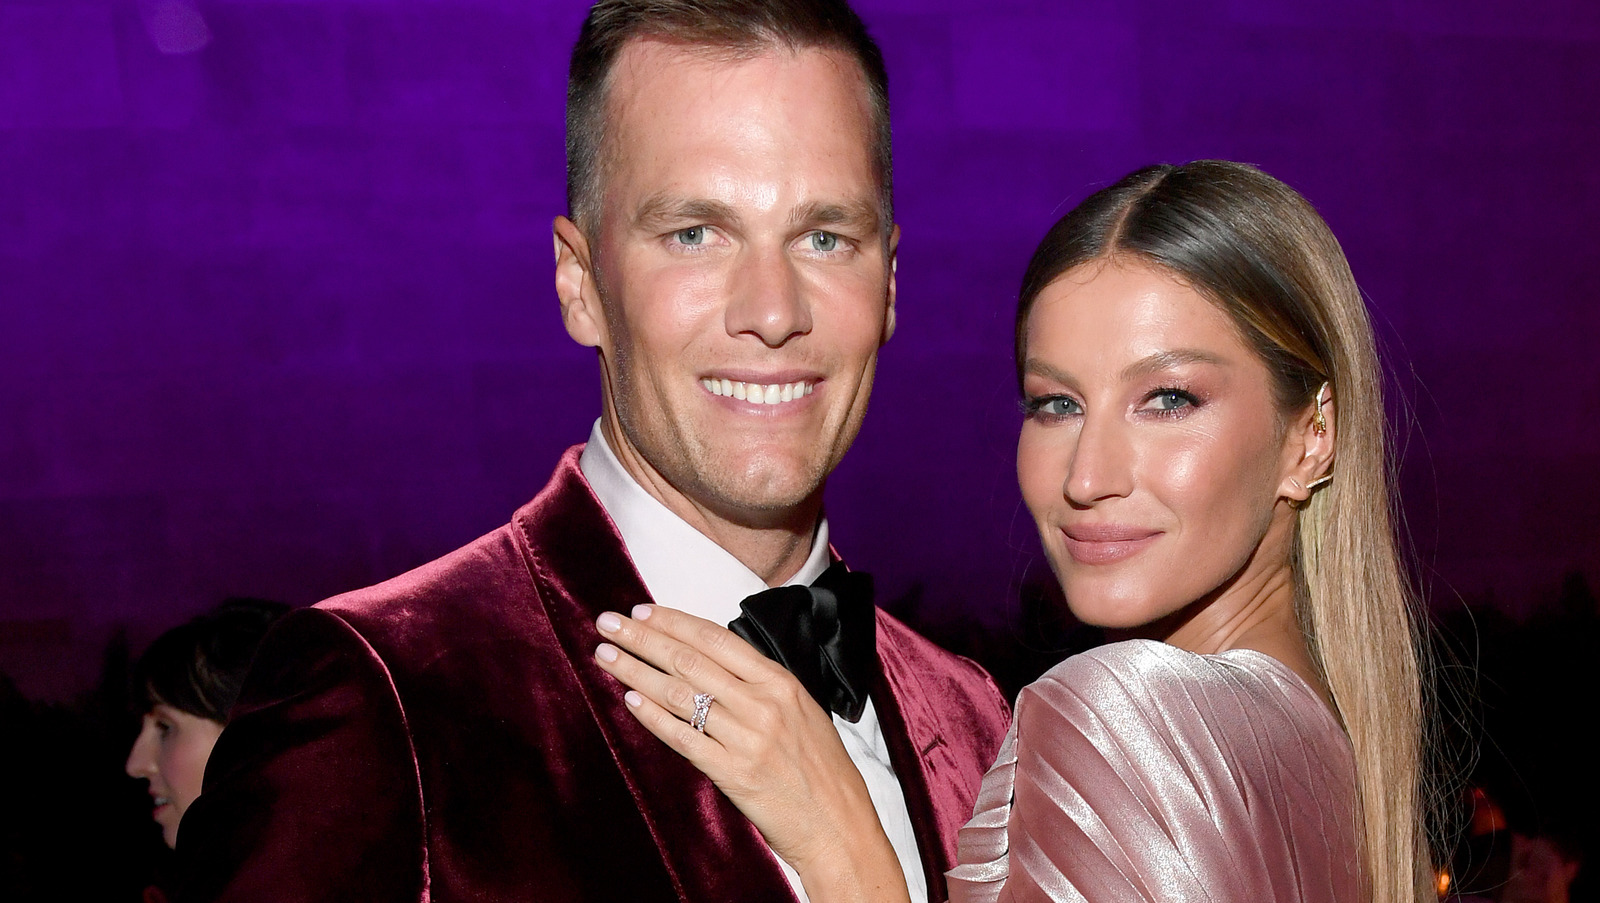 How do supermodel Gisele Bündchen and her NFL star husband Tom Brady spend  their millions?